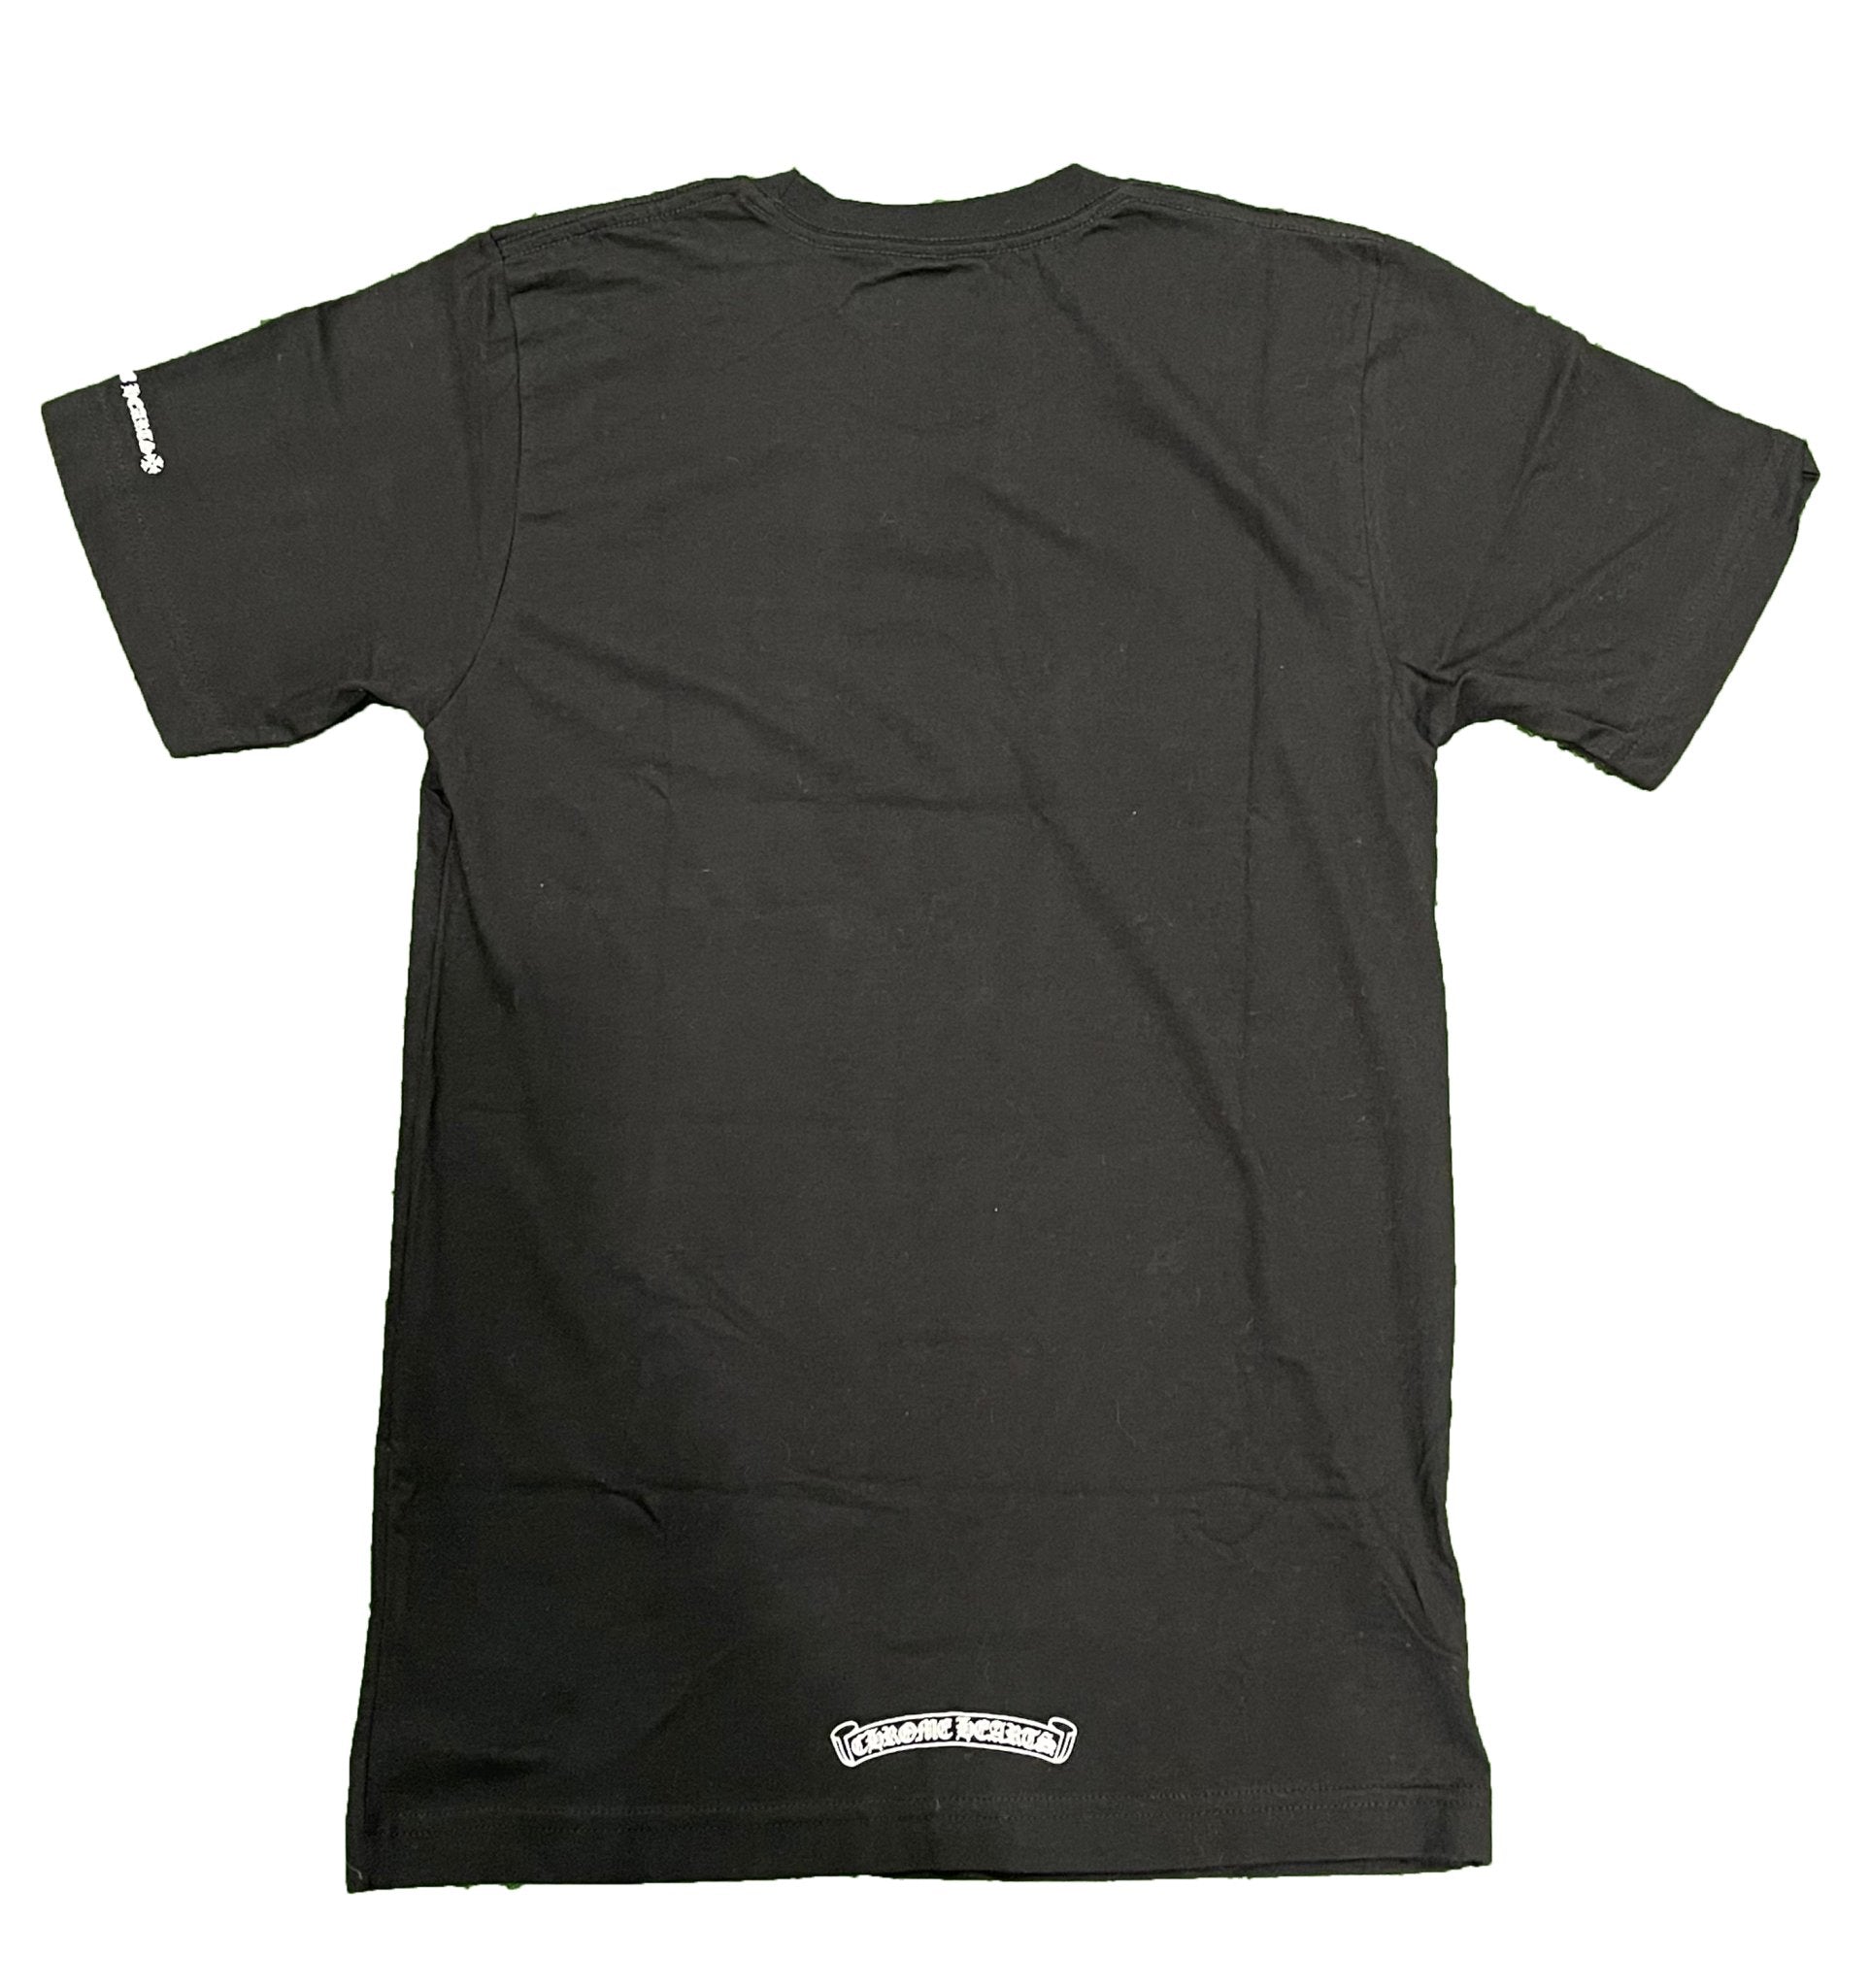 Chrome Hearts Neck Logo S/S T-shirt Black - Supra Balance Sneakers